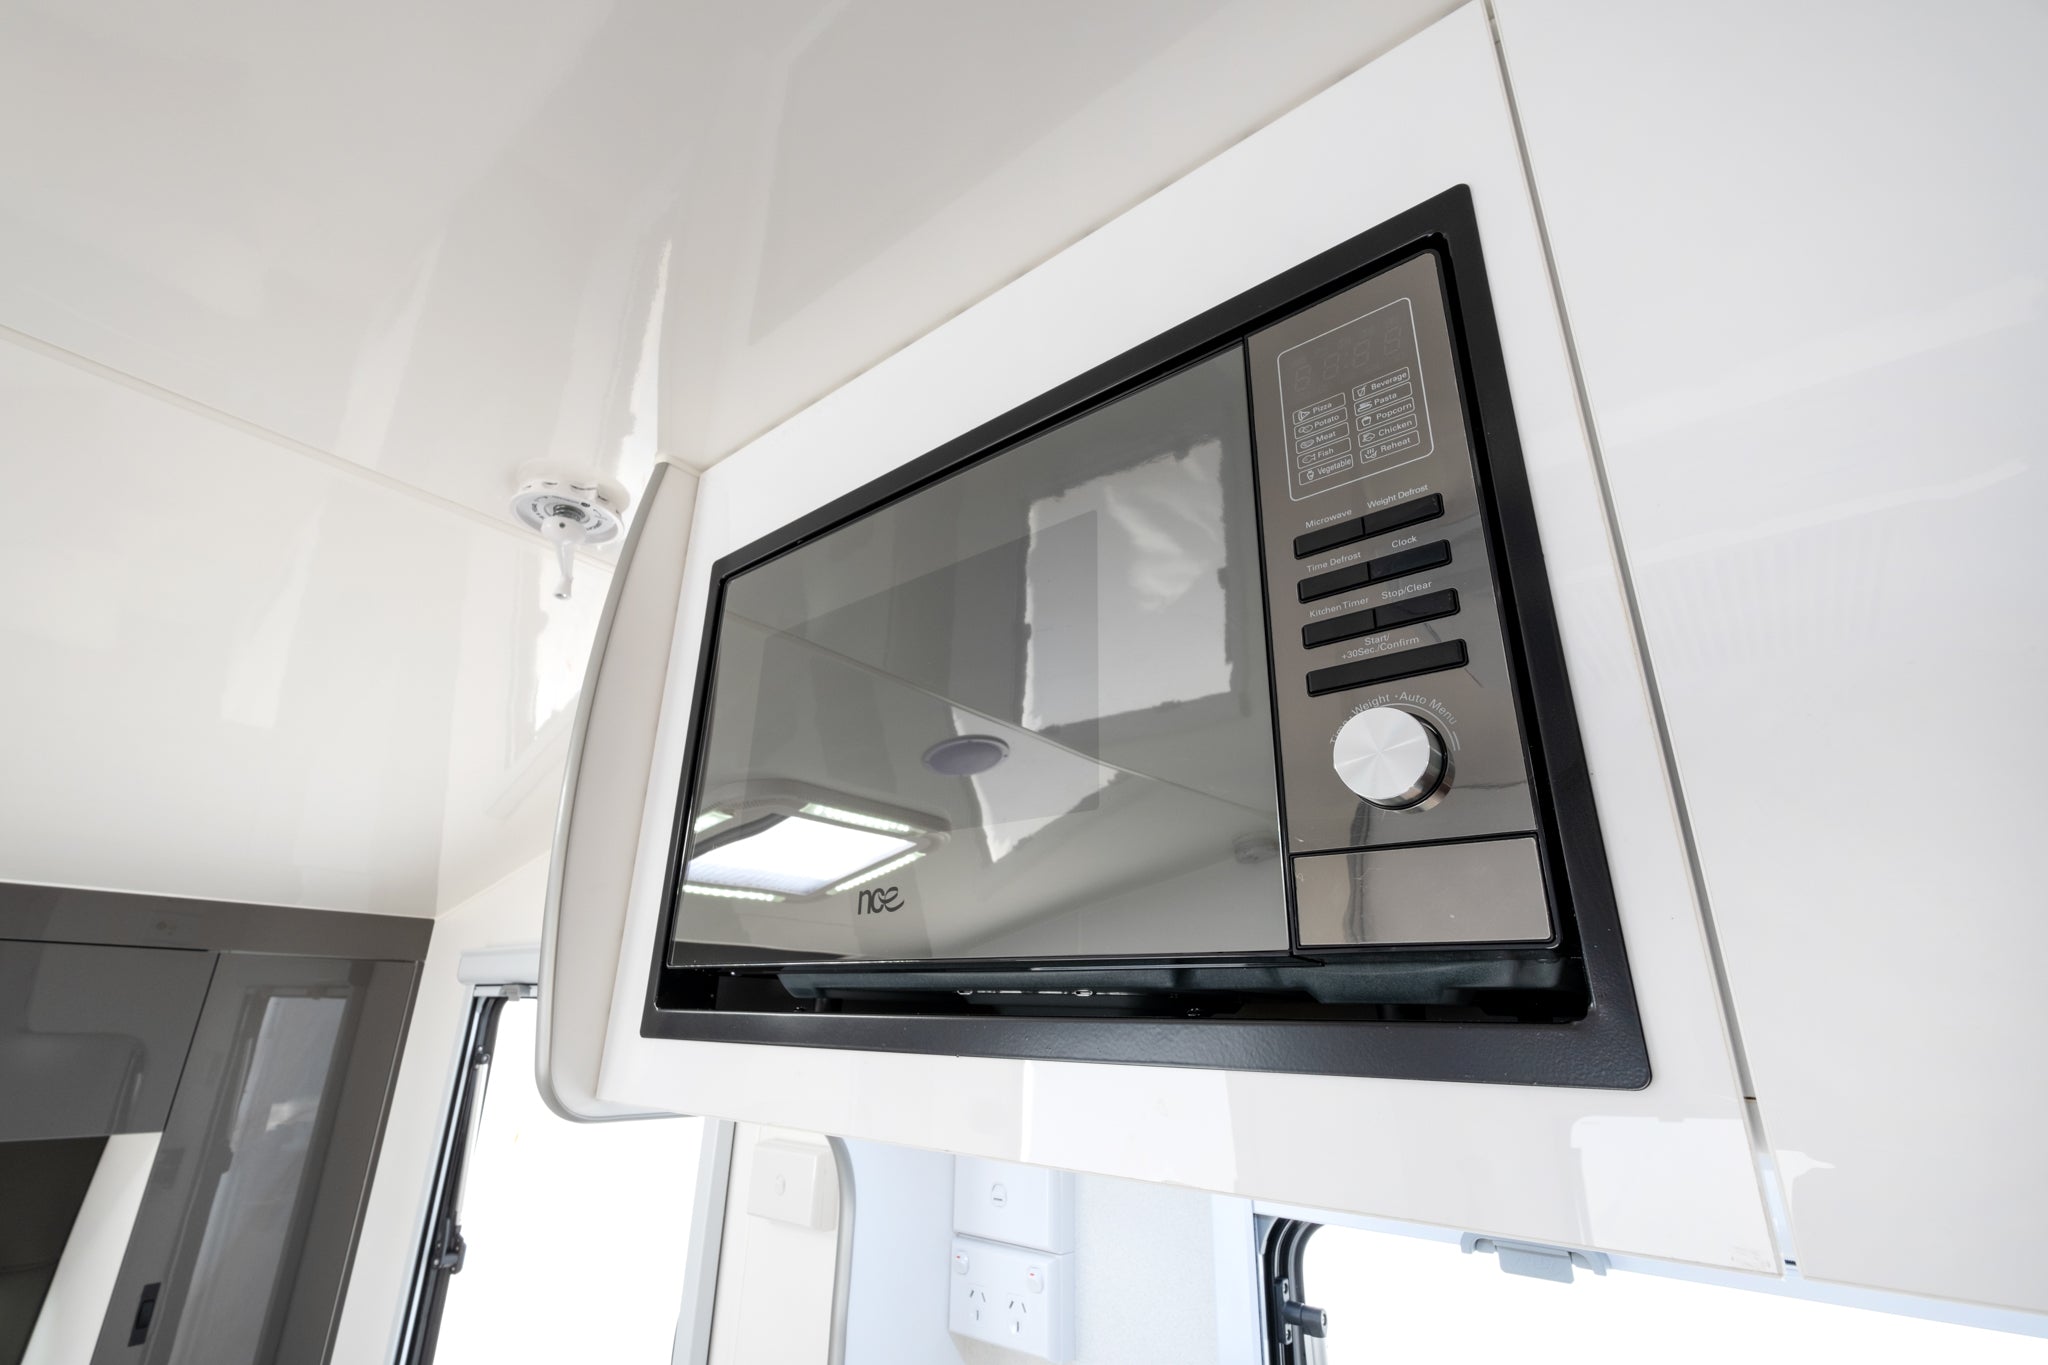 Coromal Thrill Seeker 18 Couples caravan interior microwave 